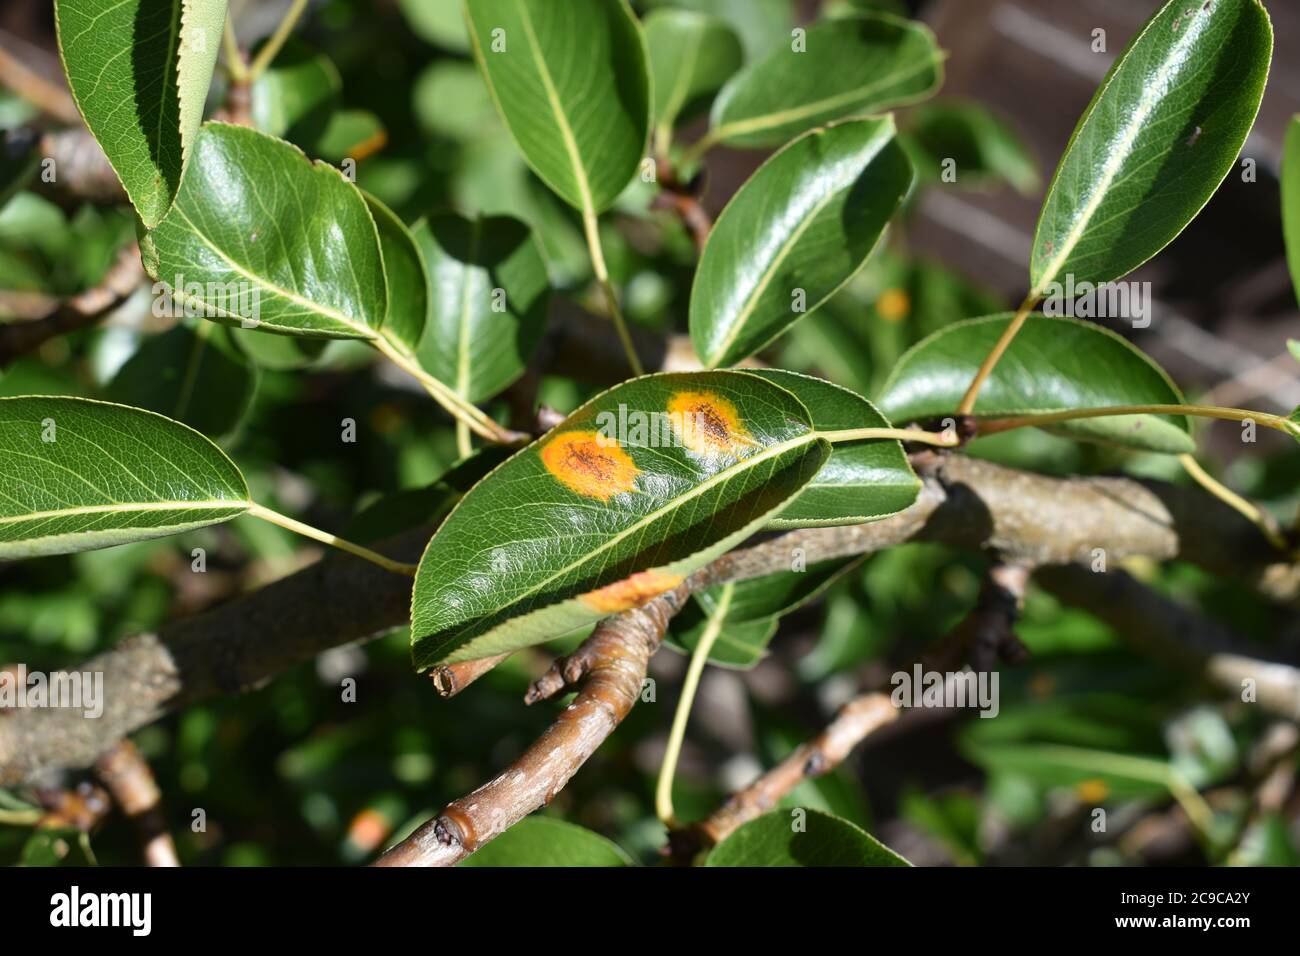 European pear rust - Gymnosporangium sabinae - on a pear tree.  This disease is caused by fungus. Stock Photo